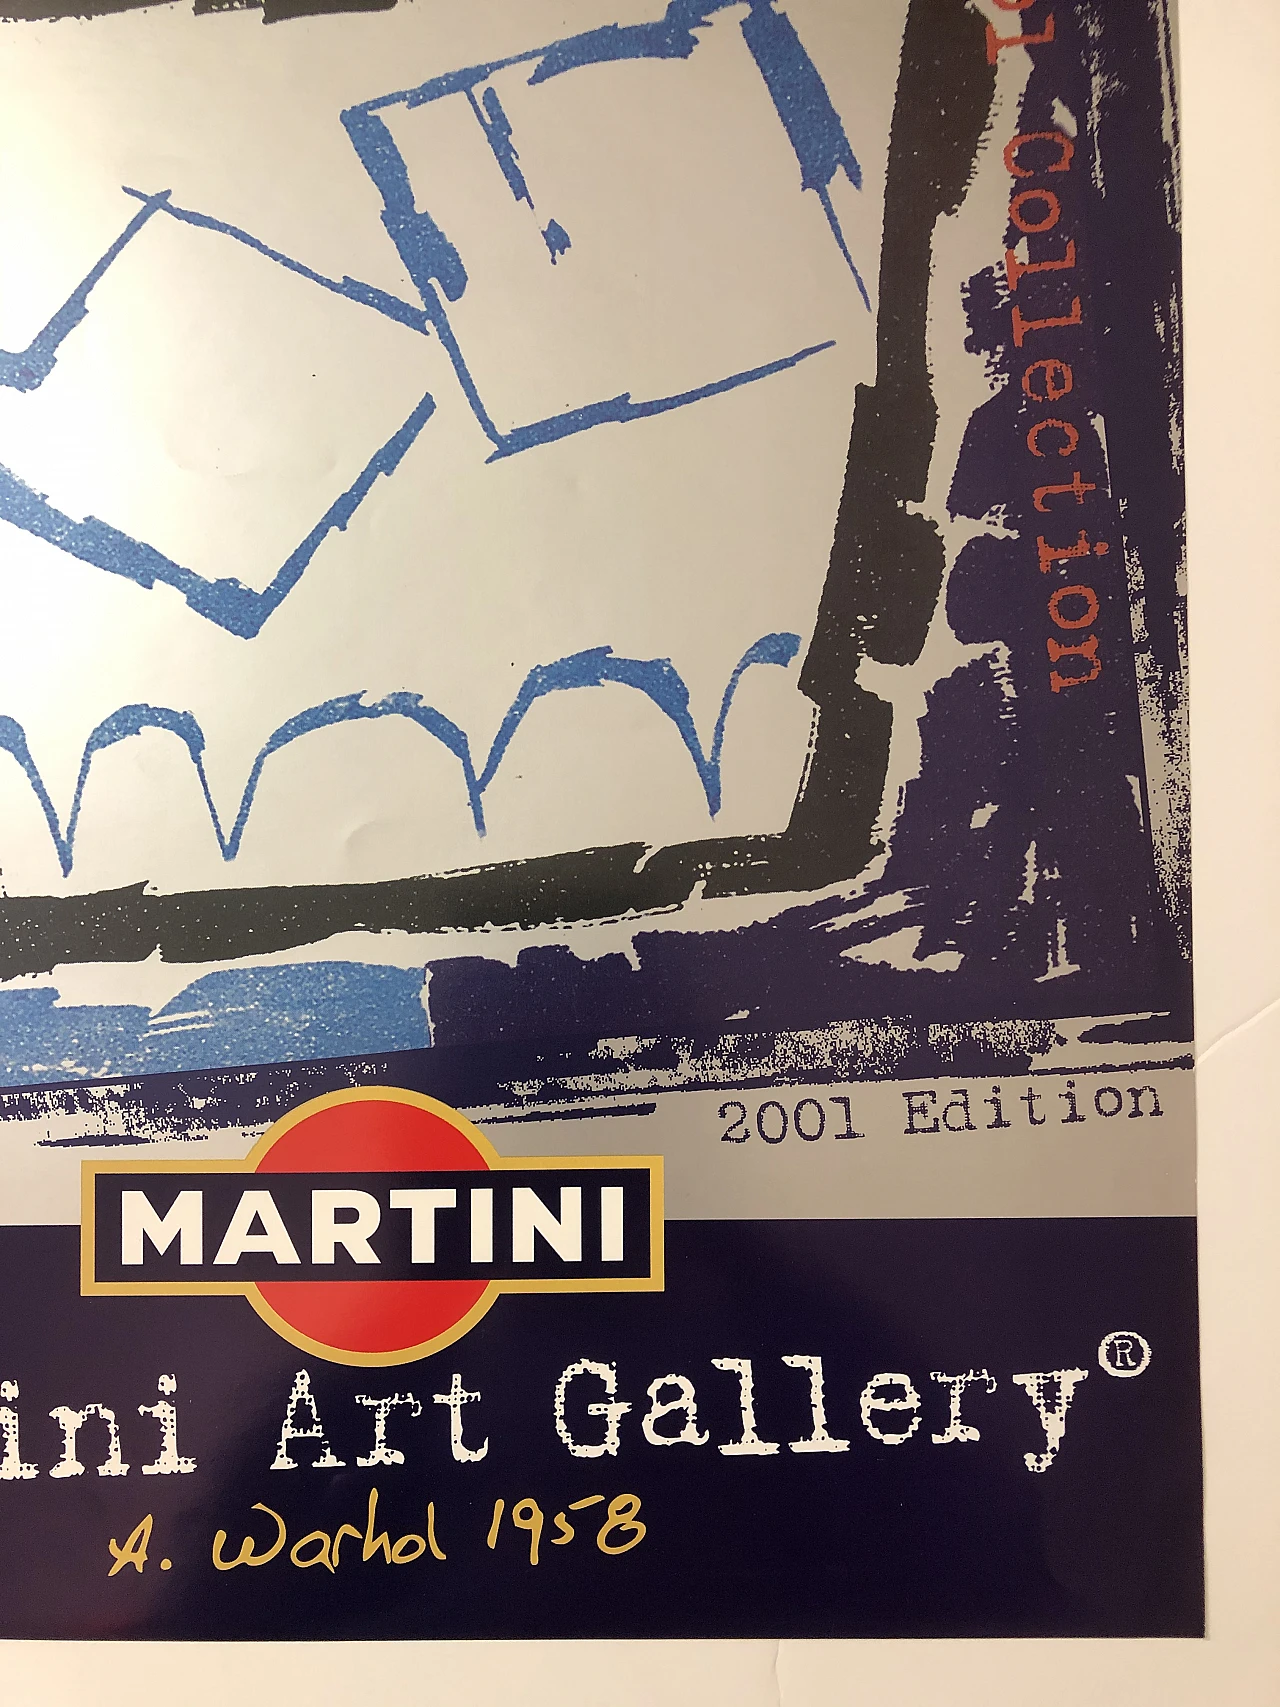 Da Andy Warhol, Martini Art Gallery, litografia, 2001 6